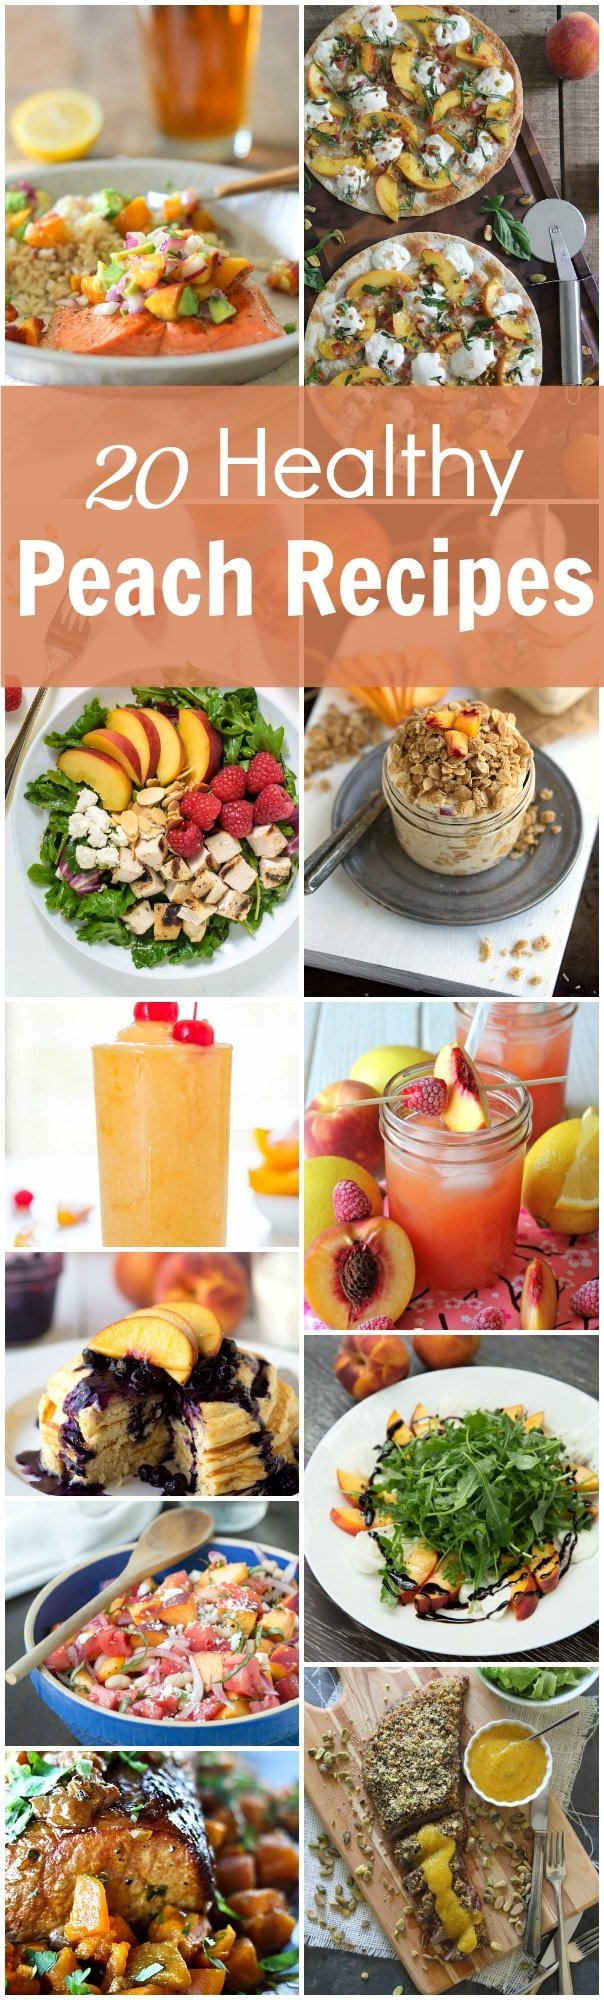 20 Healthy Peach Recipes.